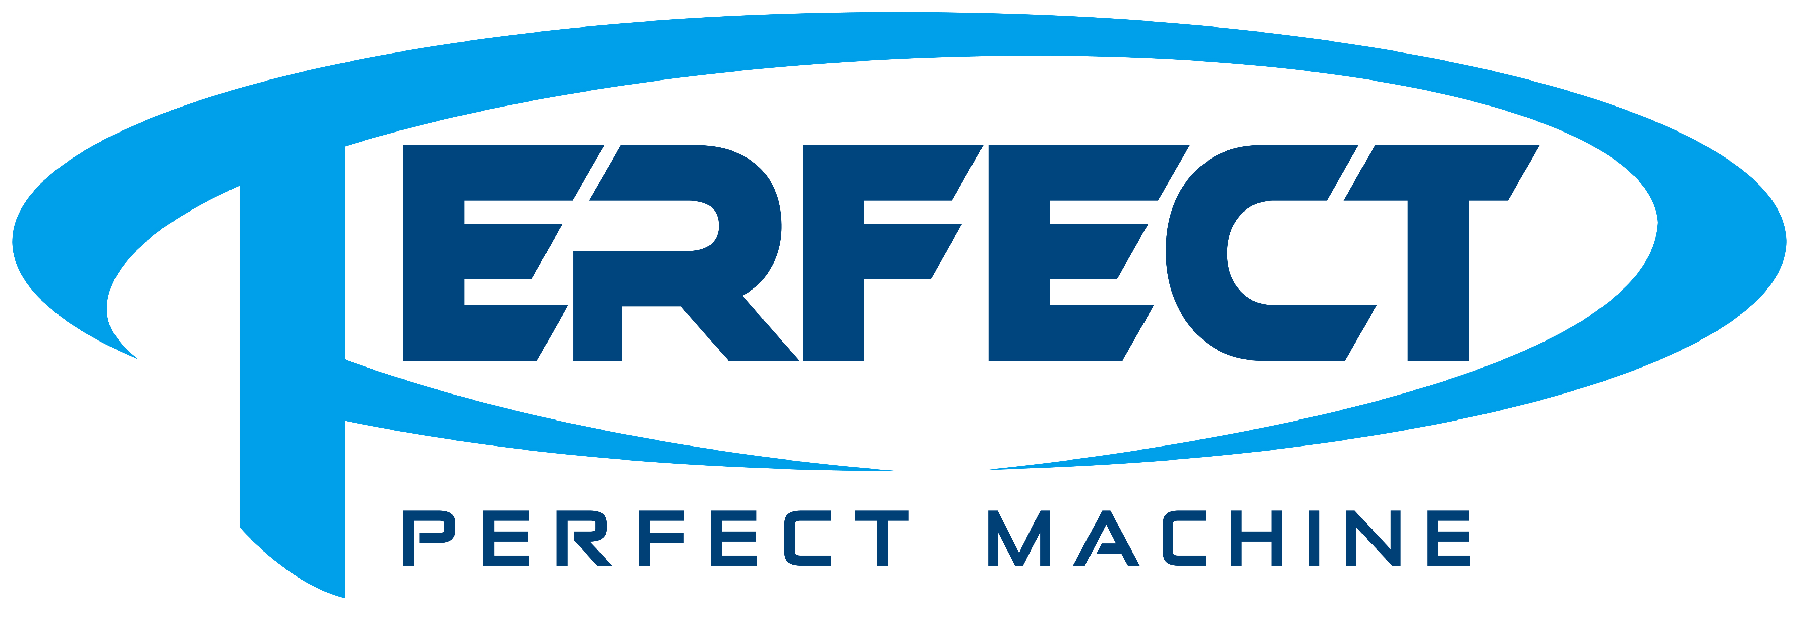 About|PERFECT MACHINE CO., LTD.